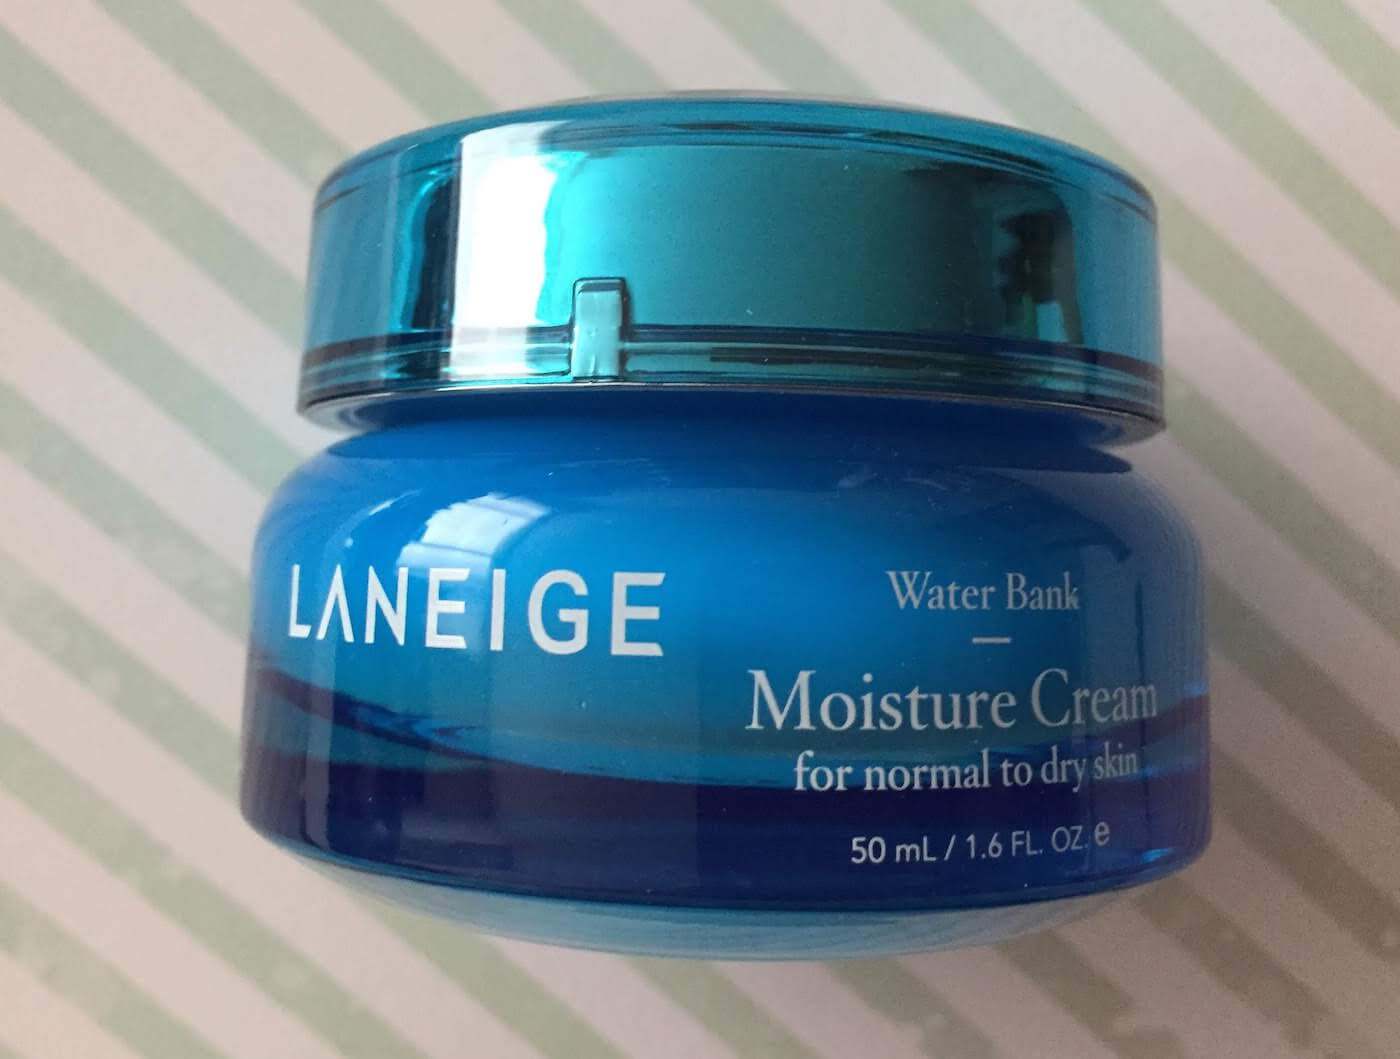 Laneige Water Bank Moisture Cream Review texture